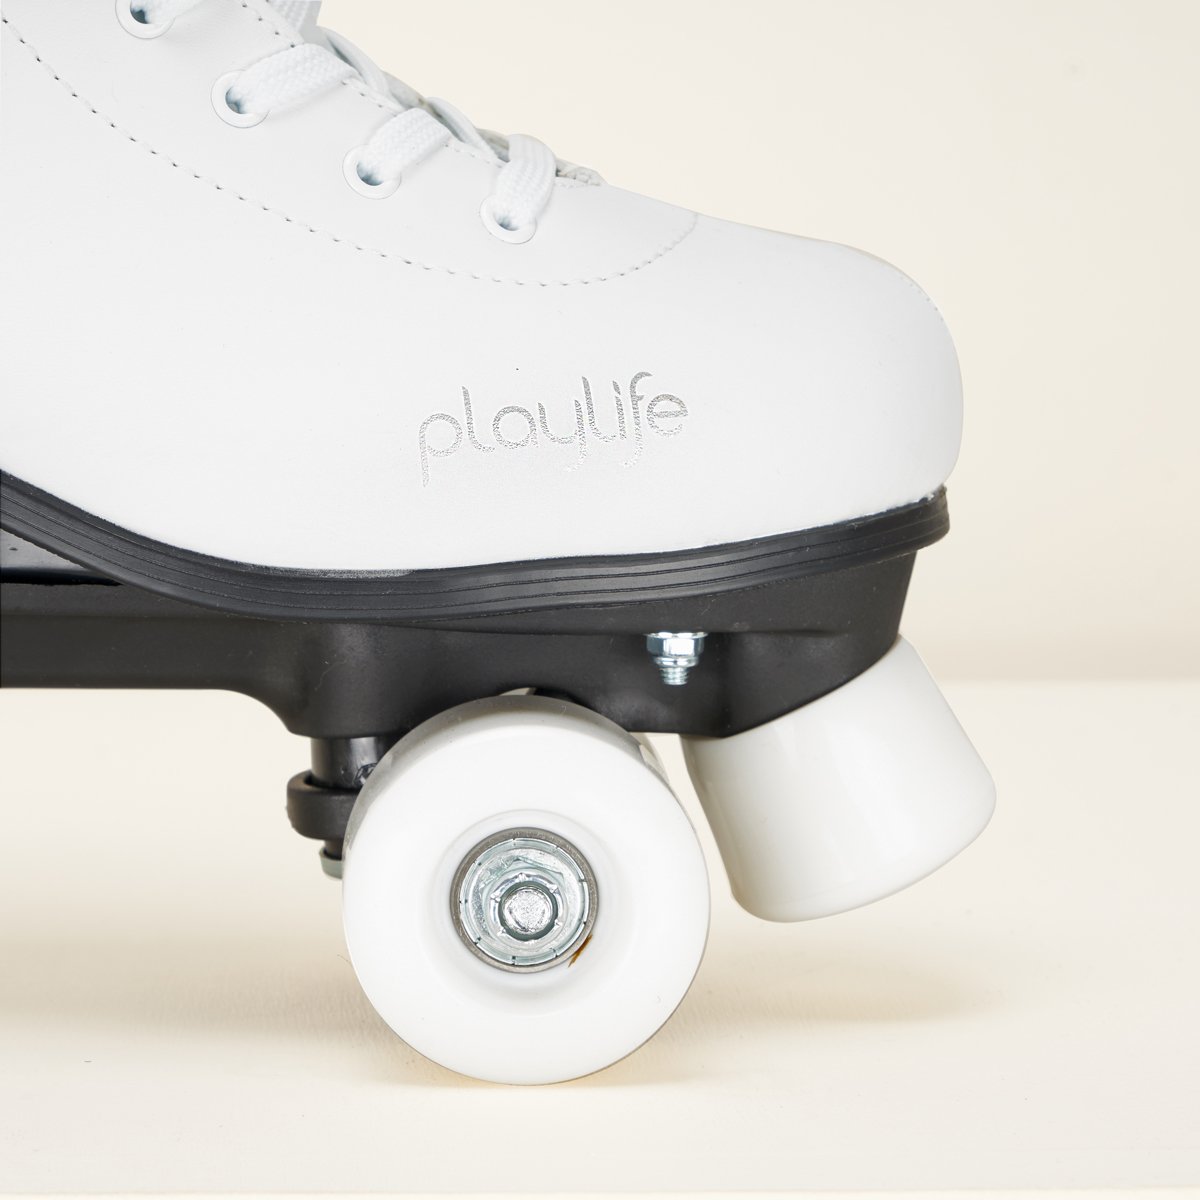 Playlife Kids Classic White Adjustable Skates